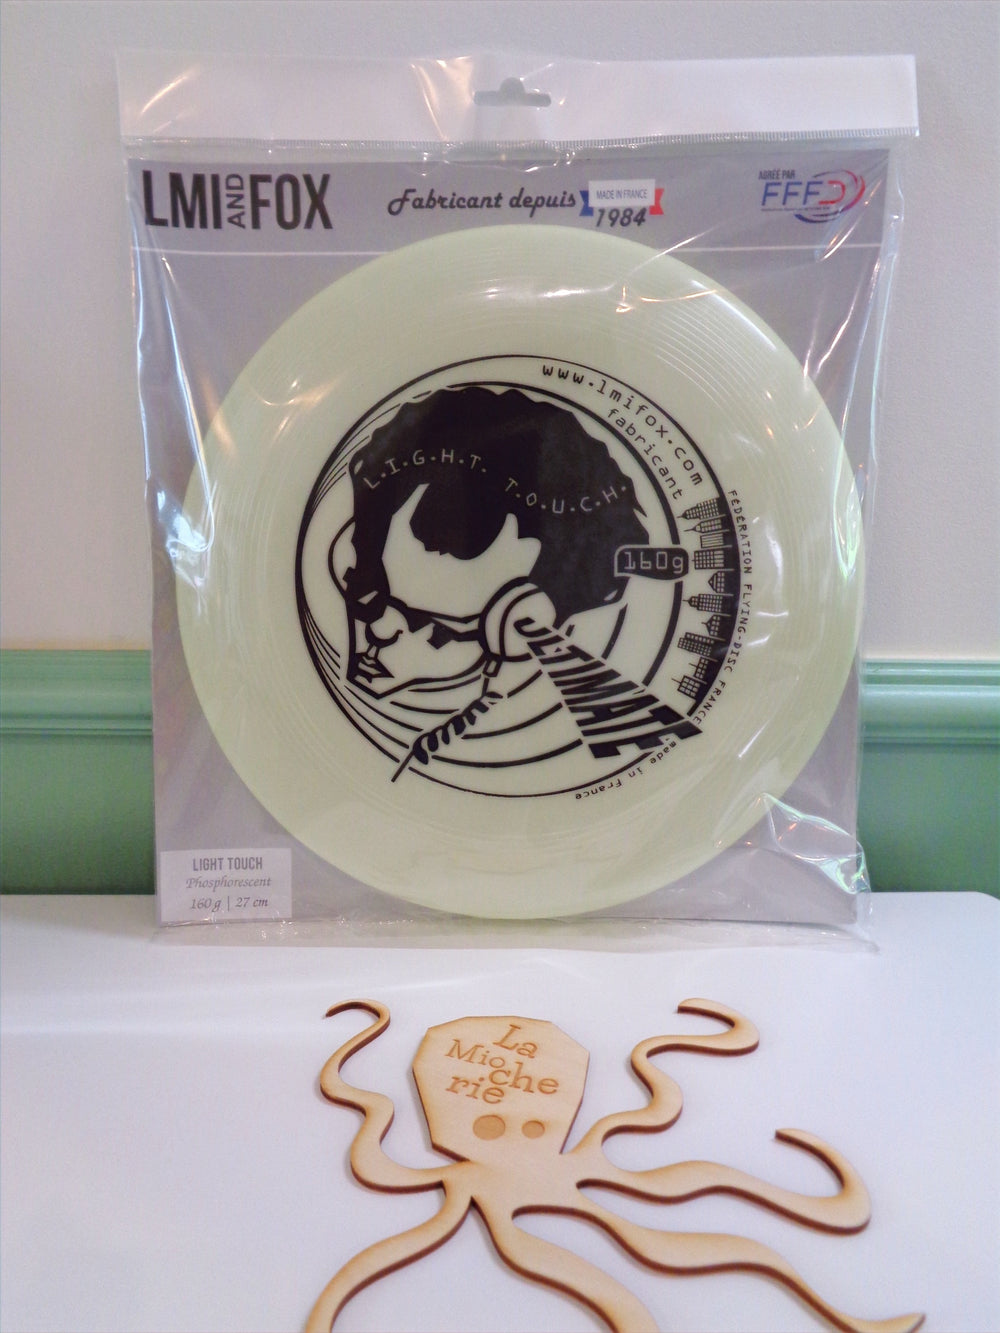 Frisbee "Spirale LIGHT TOUCH" Phospho 160 Lmi & Fox